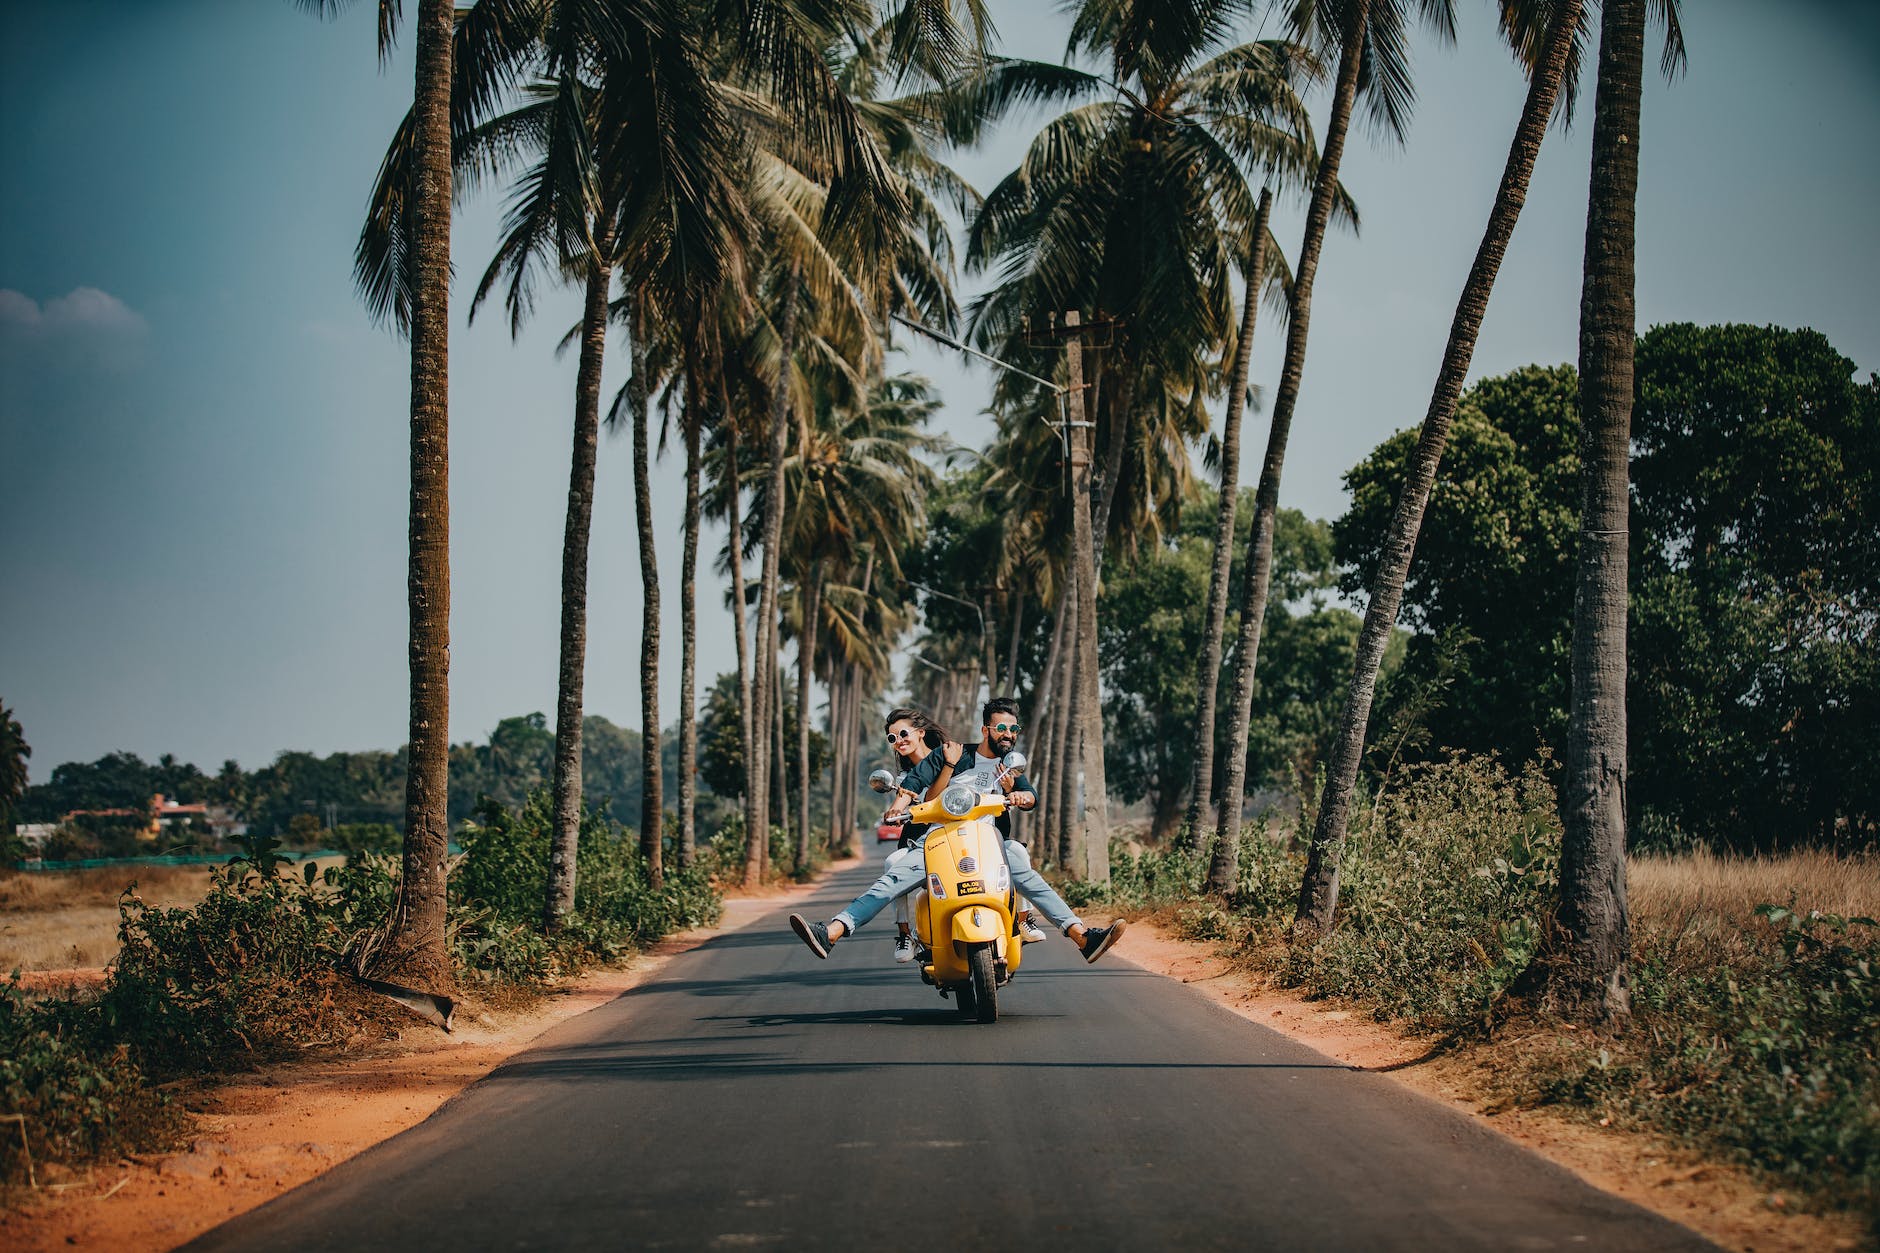 A boy and girl ride a motorbike alongside a beach with palm trees 